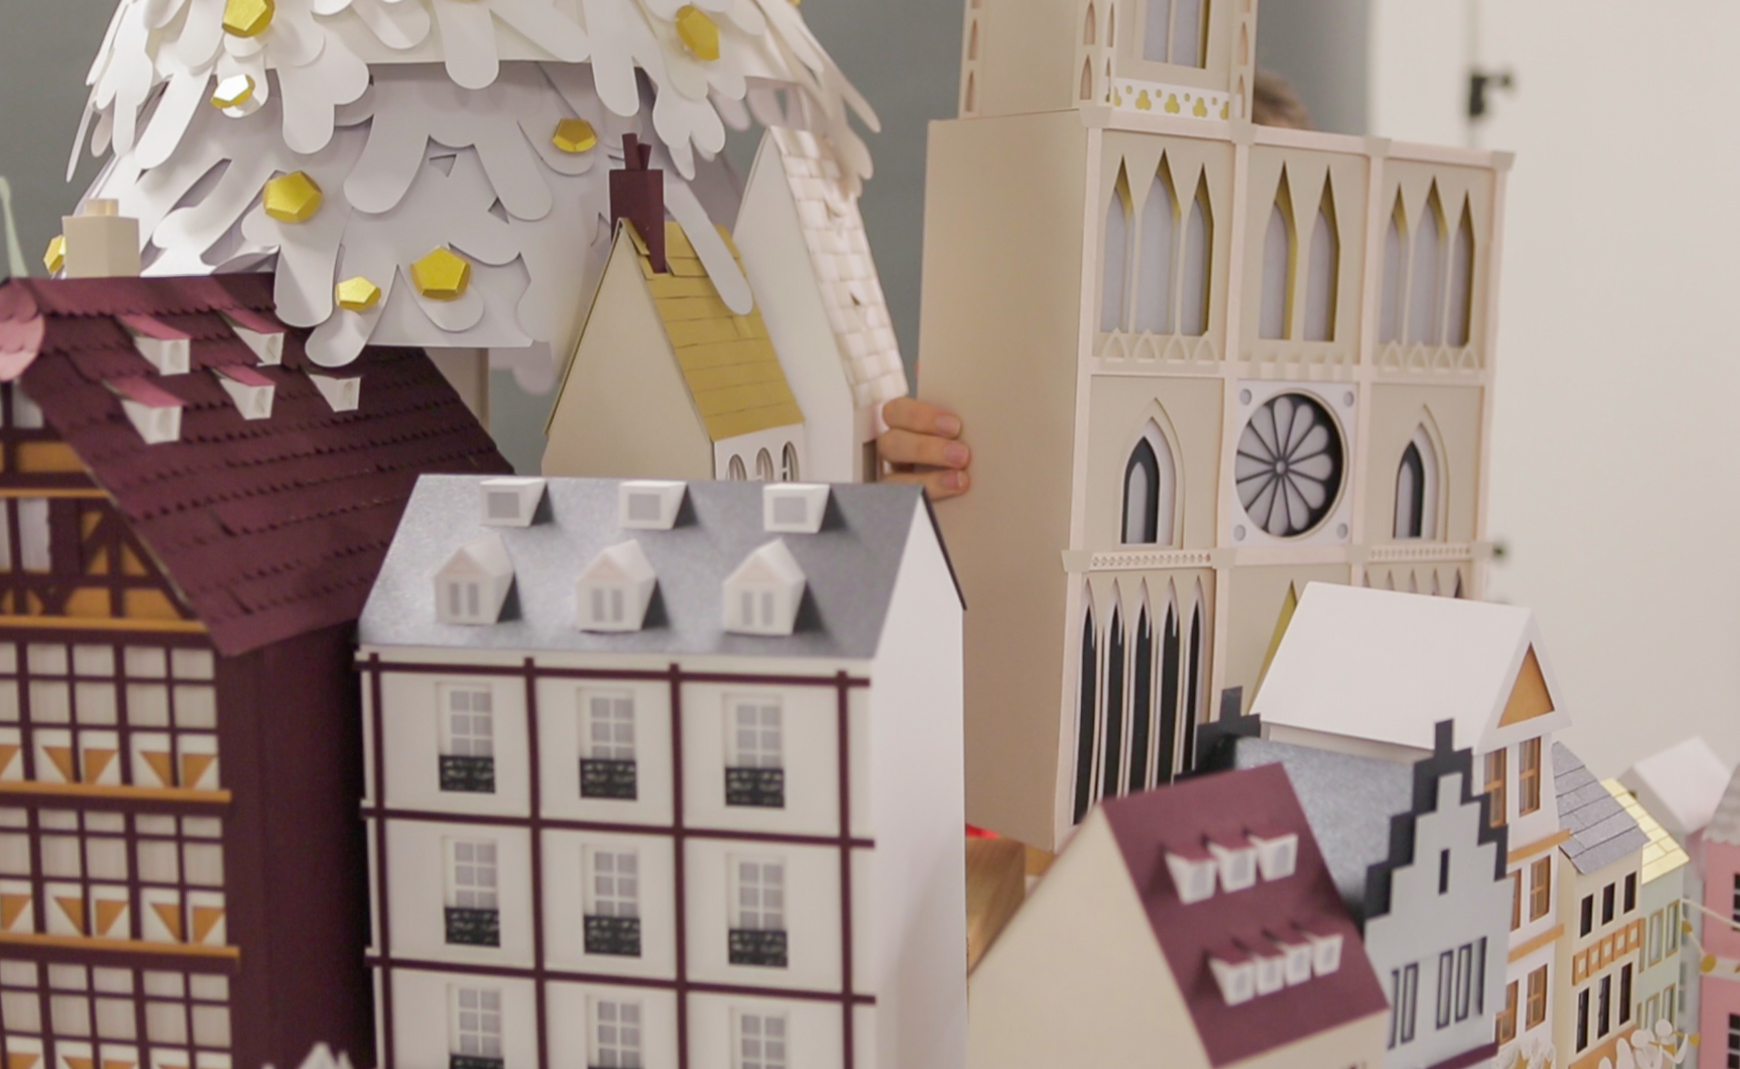 assembling paper buildings at photography studio